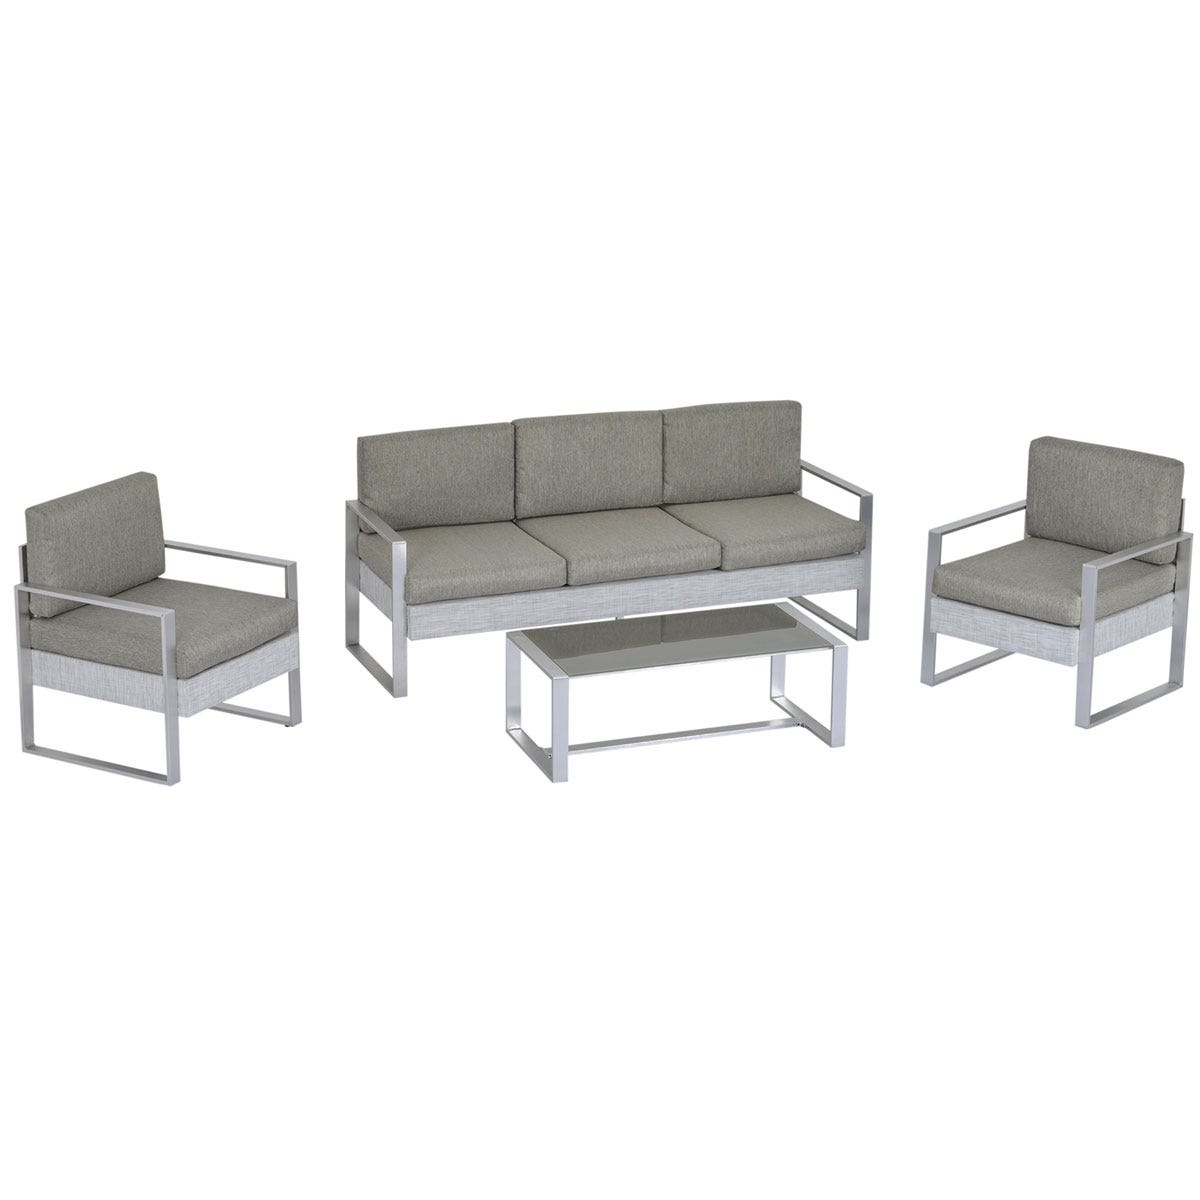 Outsunny 4pc Patio Conversation Furniture Set w/ Coffee Table - Aluminum